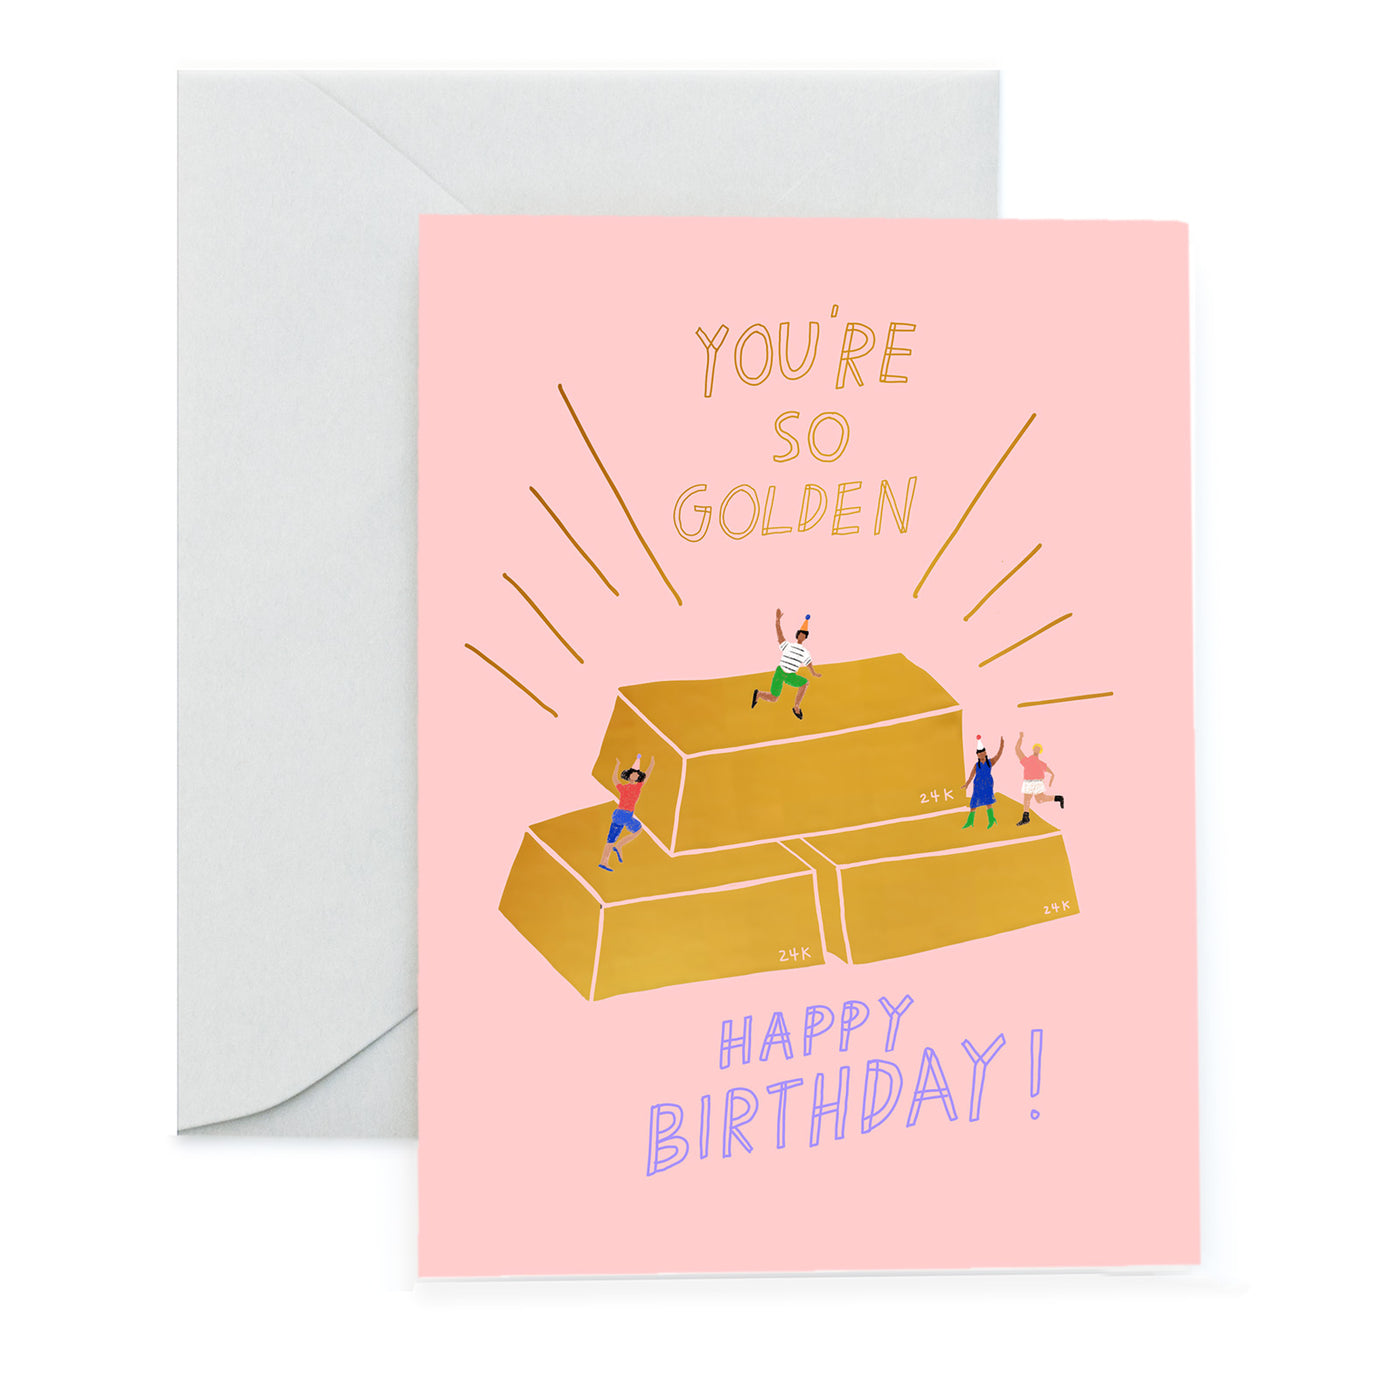 GOLDEN - Birthday Card